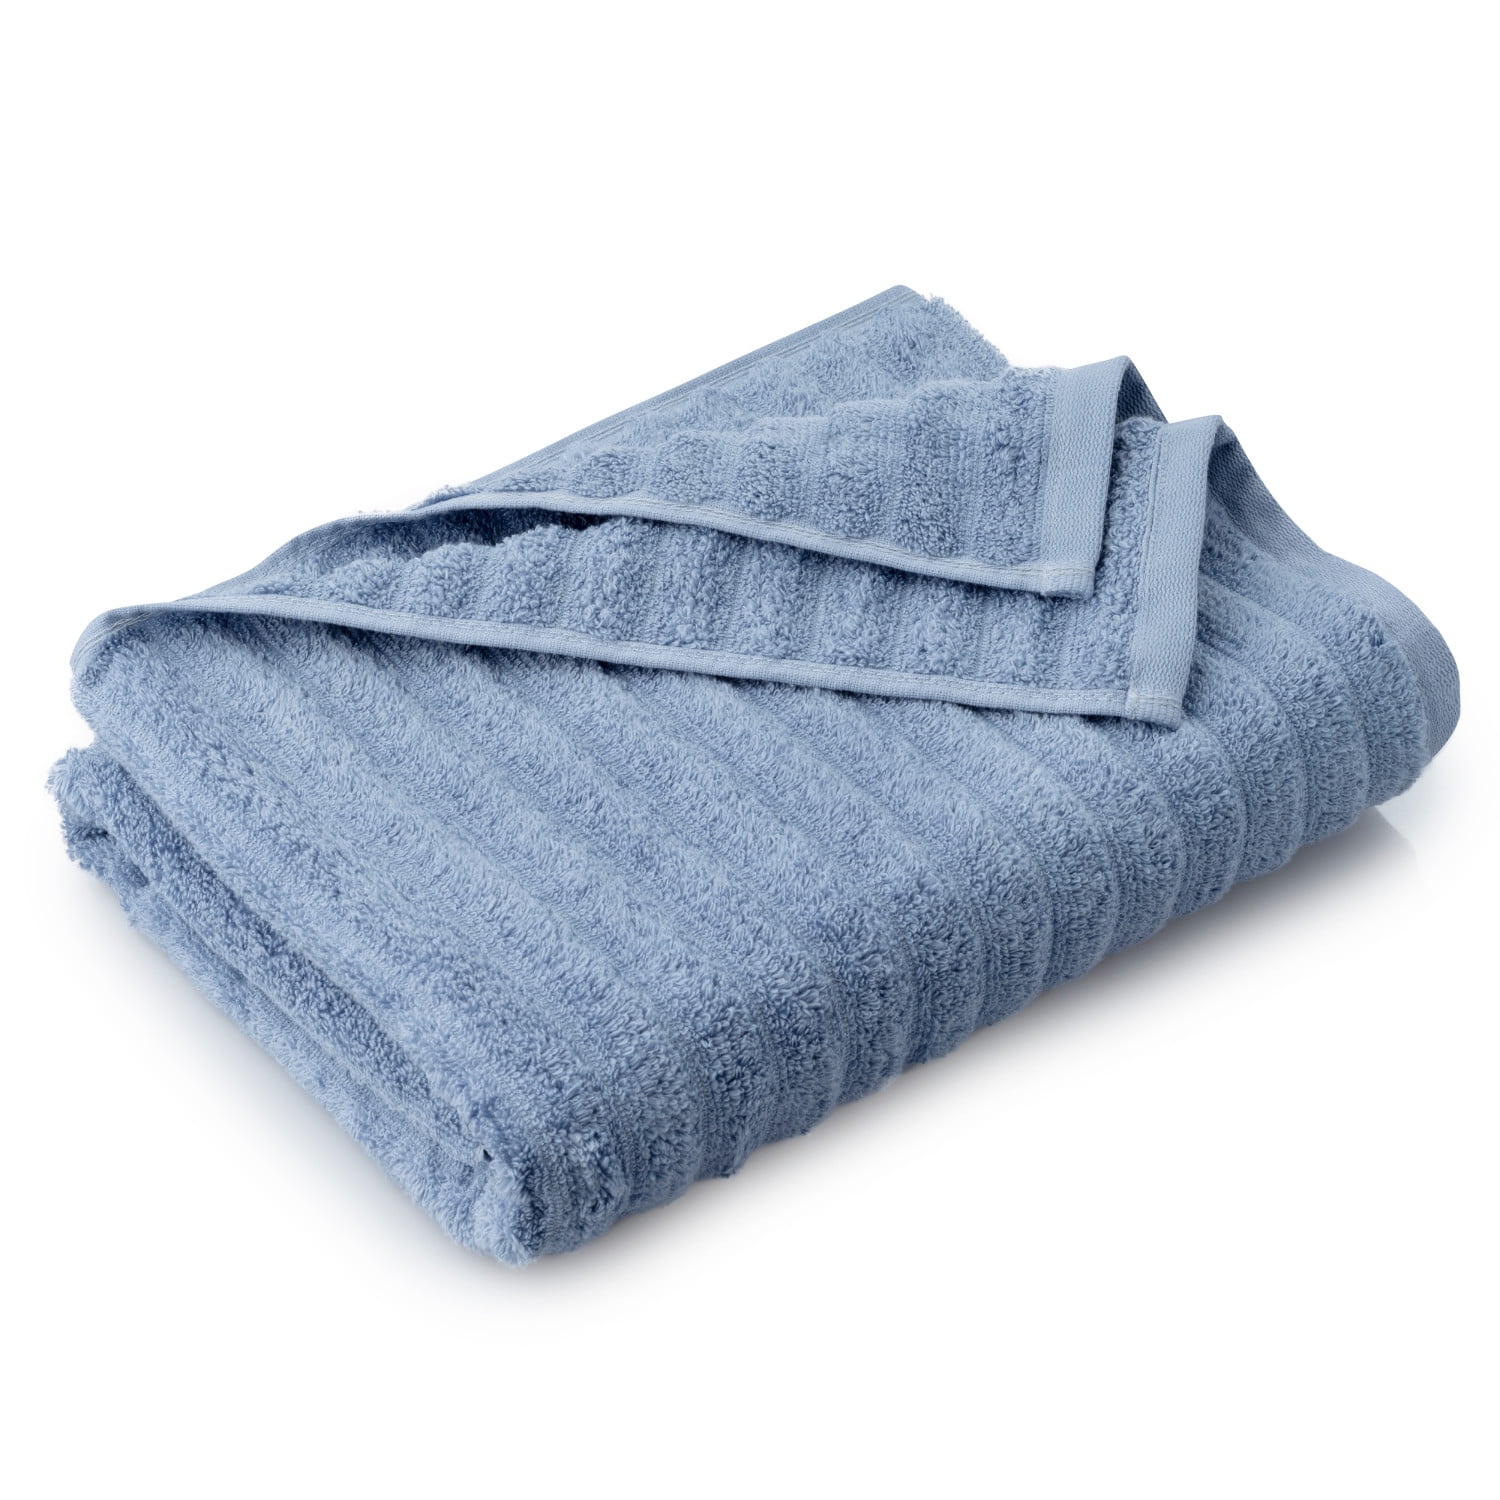 6pc Performance 2 Hand Towel & 4 Washcloth Set Blue Threshold - New